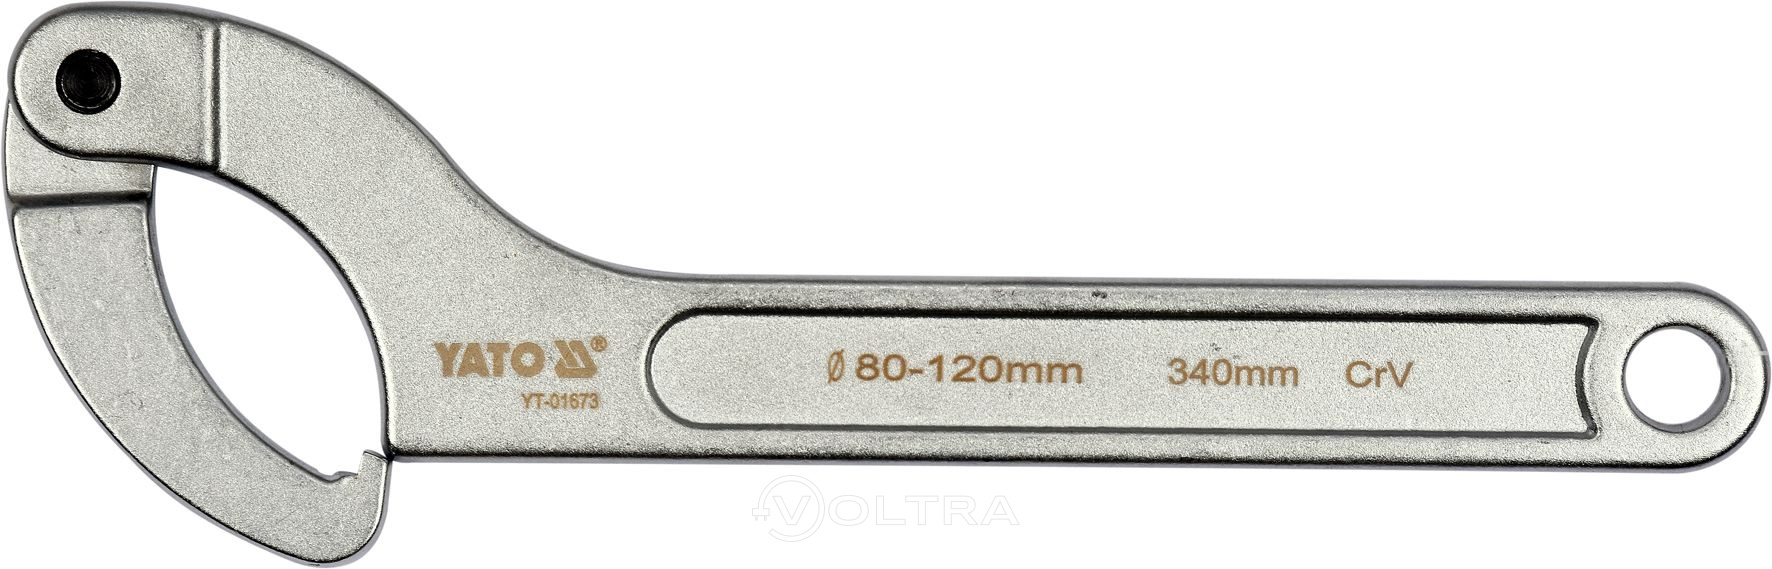 Ключ сегментный шарнирный 80-120мм Yato YT-01673